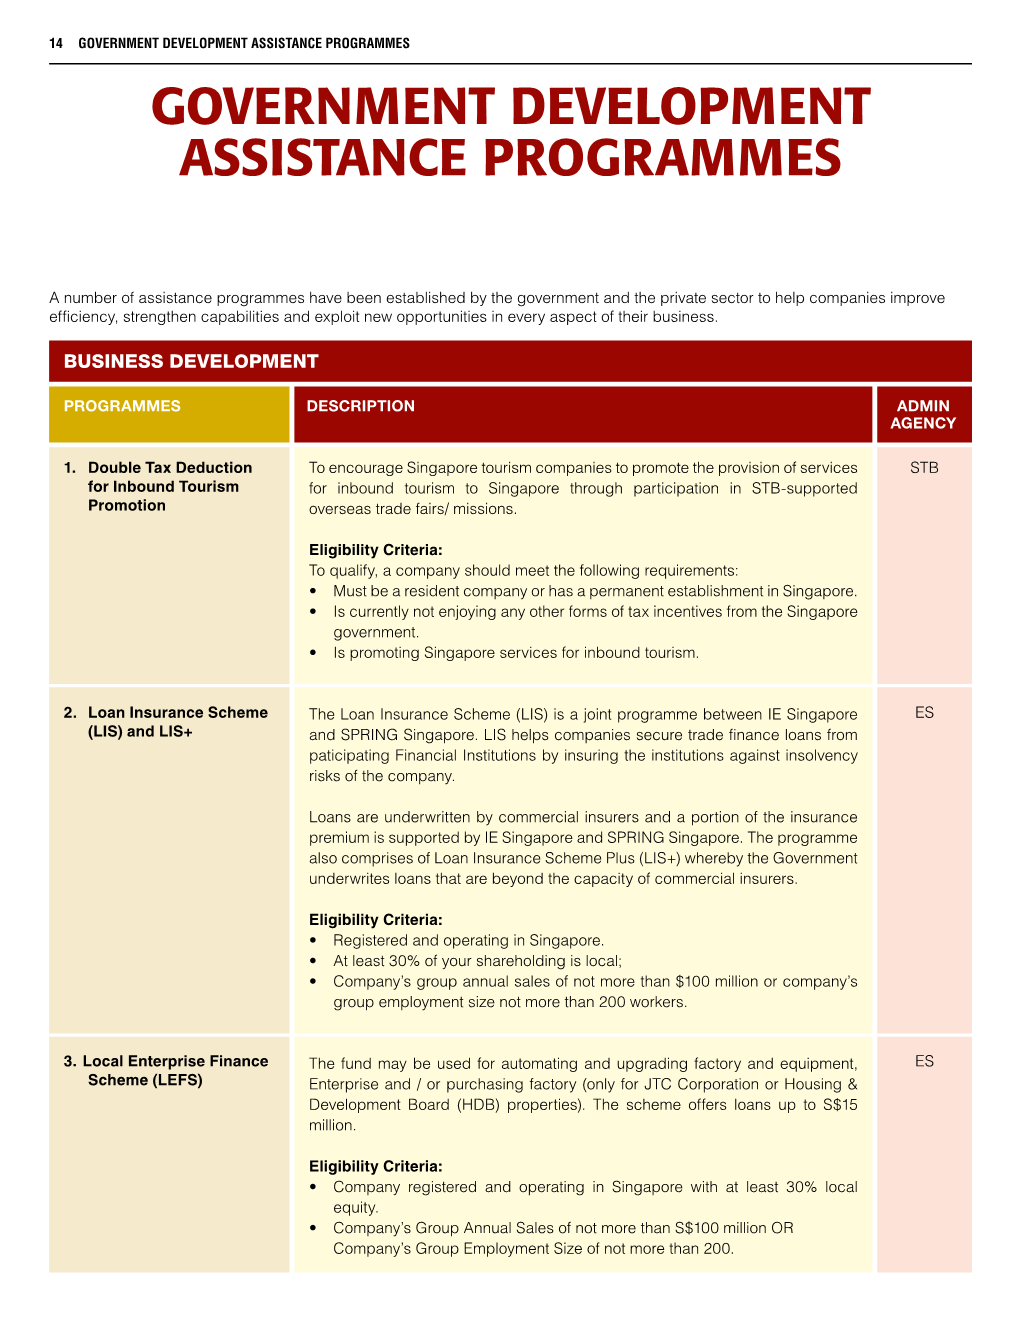 Government Development Assistance Programmes Government Development Assistance Programmes